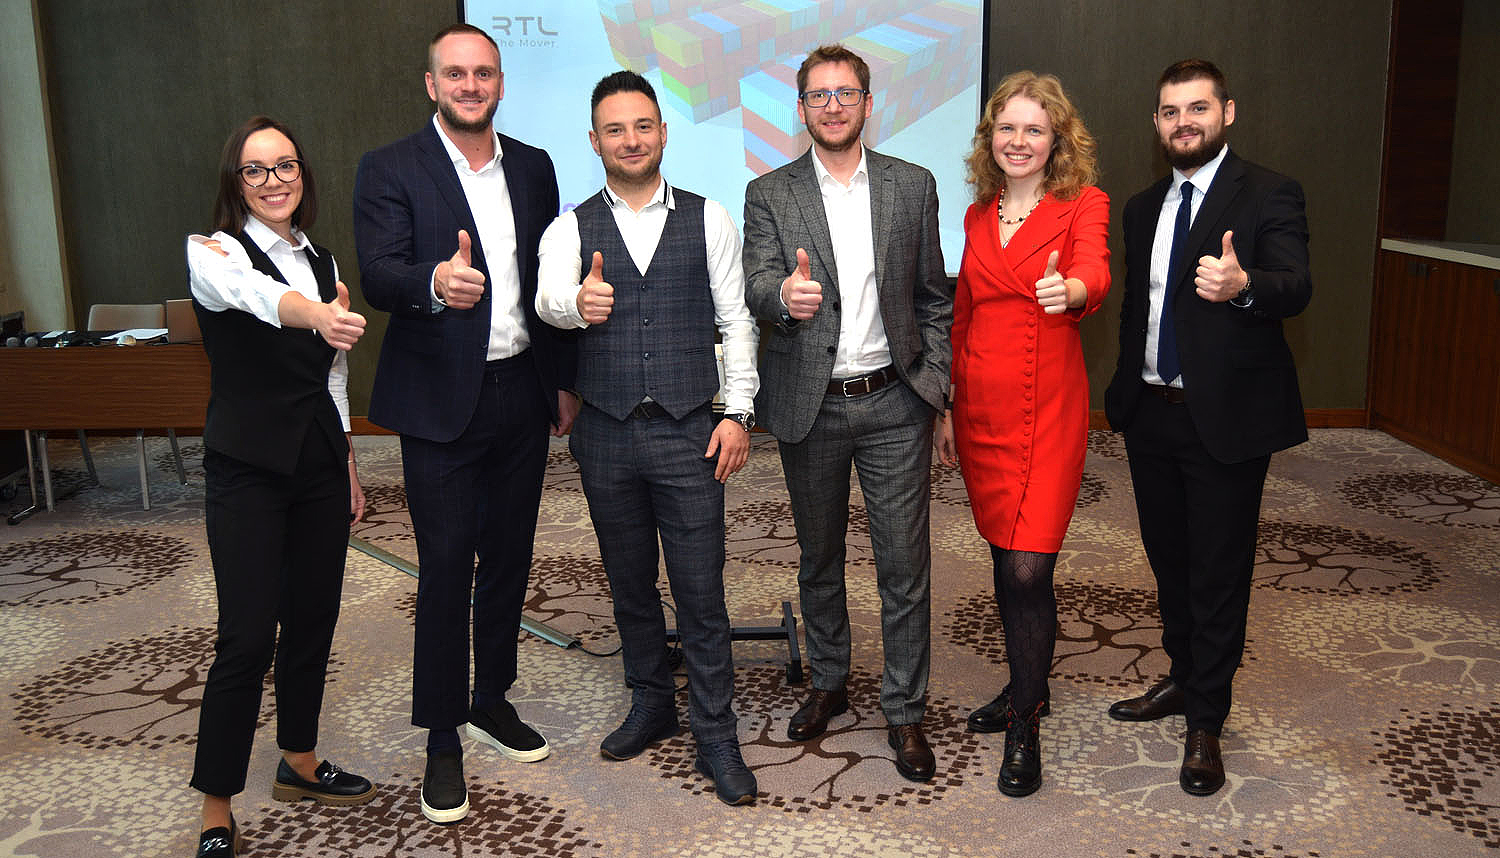 RTL Alliance business meeting in Minsk